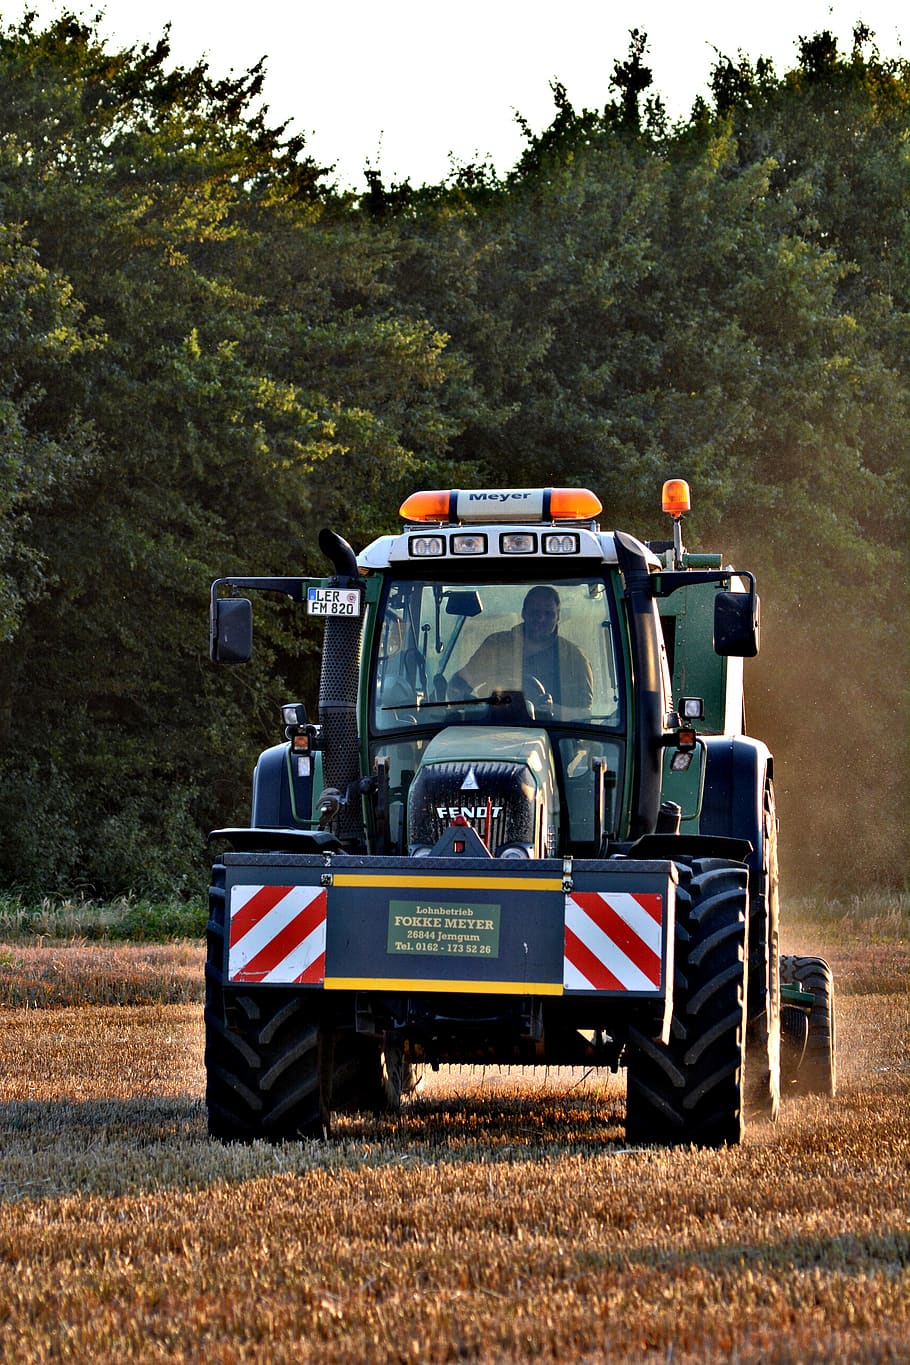 wage operating, fokke meyer, agriculture, rheiderland include a, harvest, tractors, weener, midlum, jemgum, commercial vehicle